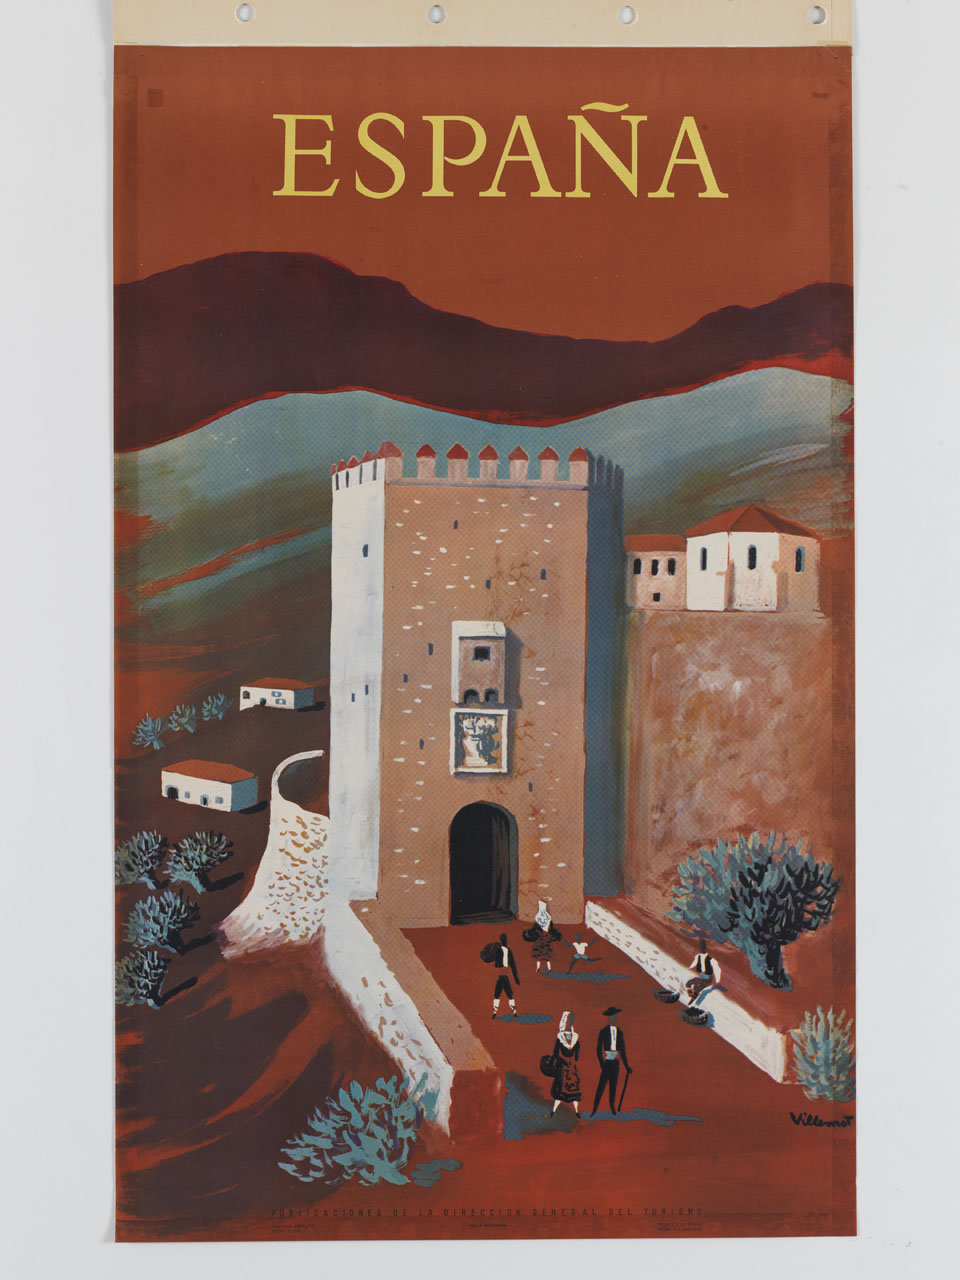 torrione di castello e persone in abiti tradizionali spagnoli (manifesto) di Villemot Bernard (sec. XX)